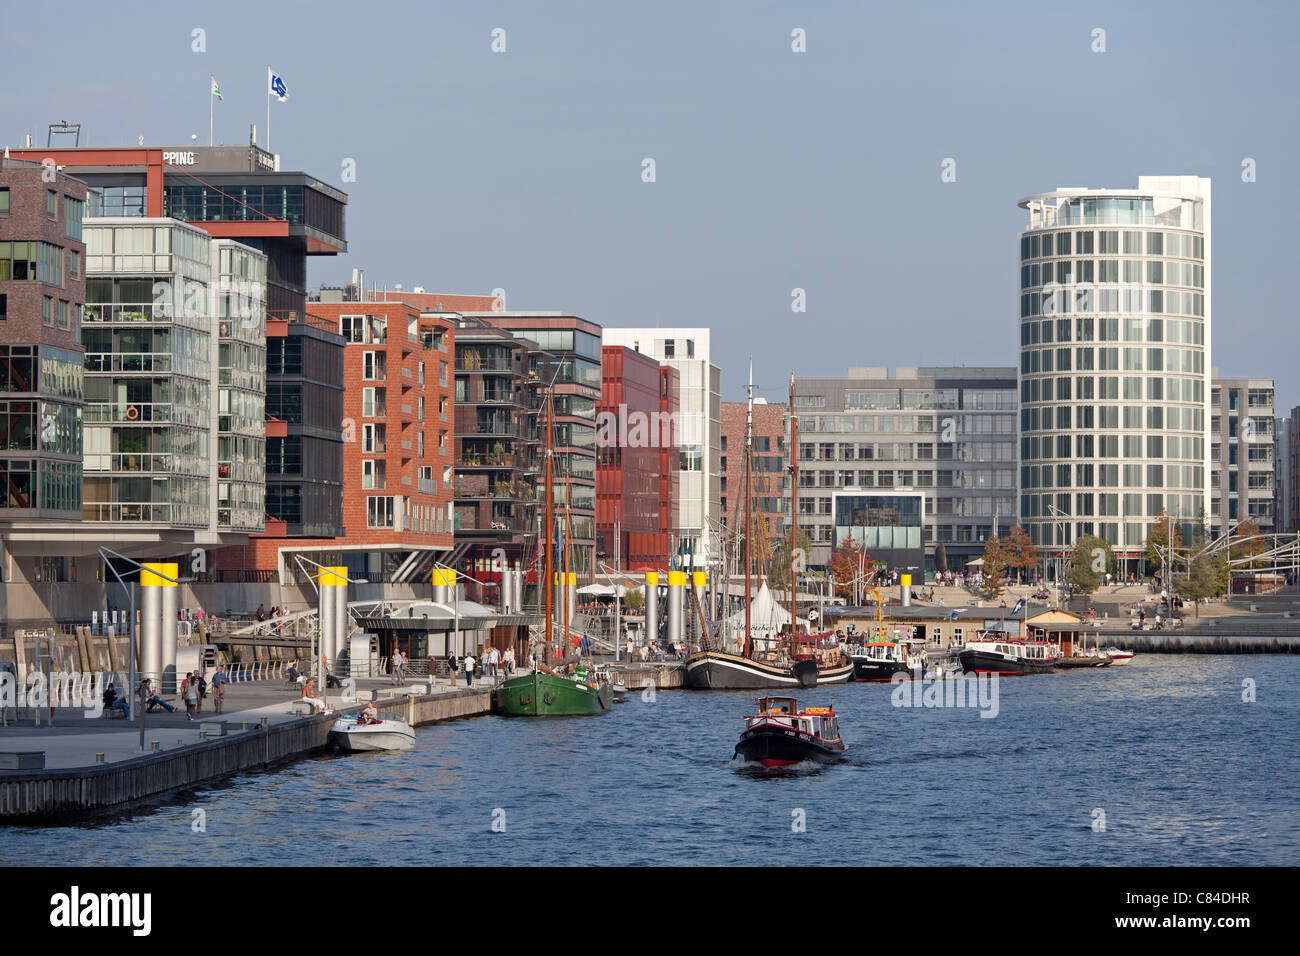 Sandtorkai, Hafencity (Harbour City) , Hambourg, Allemagne Banque D'Images